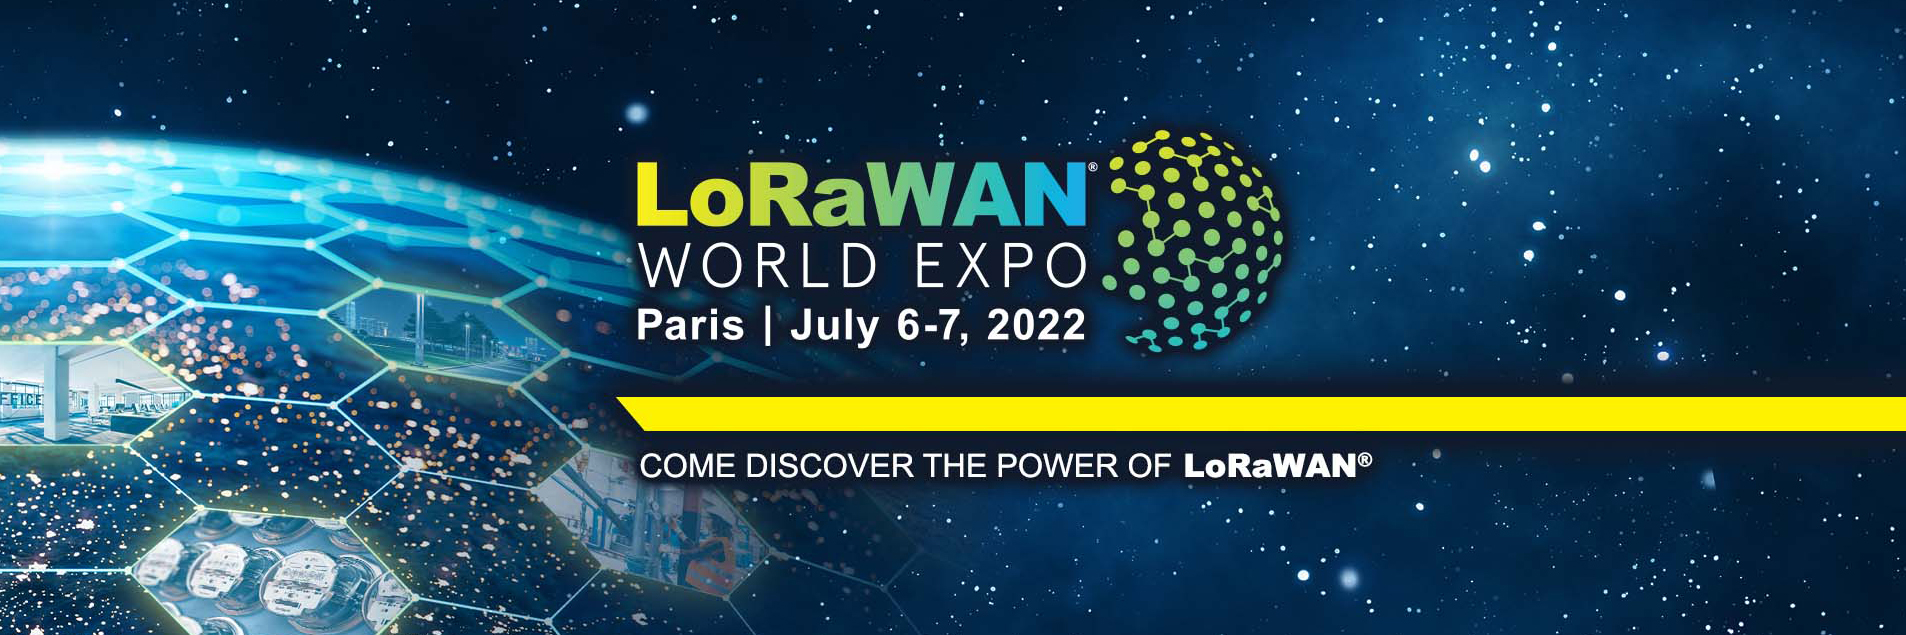 LoRaWAN World Expo Logo & Image